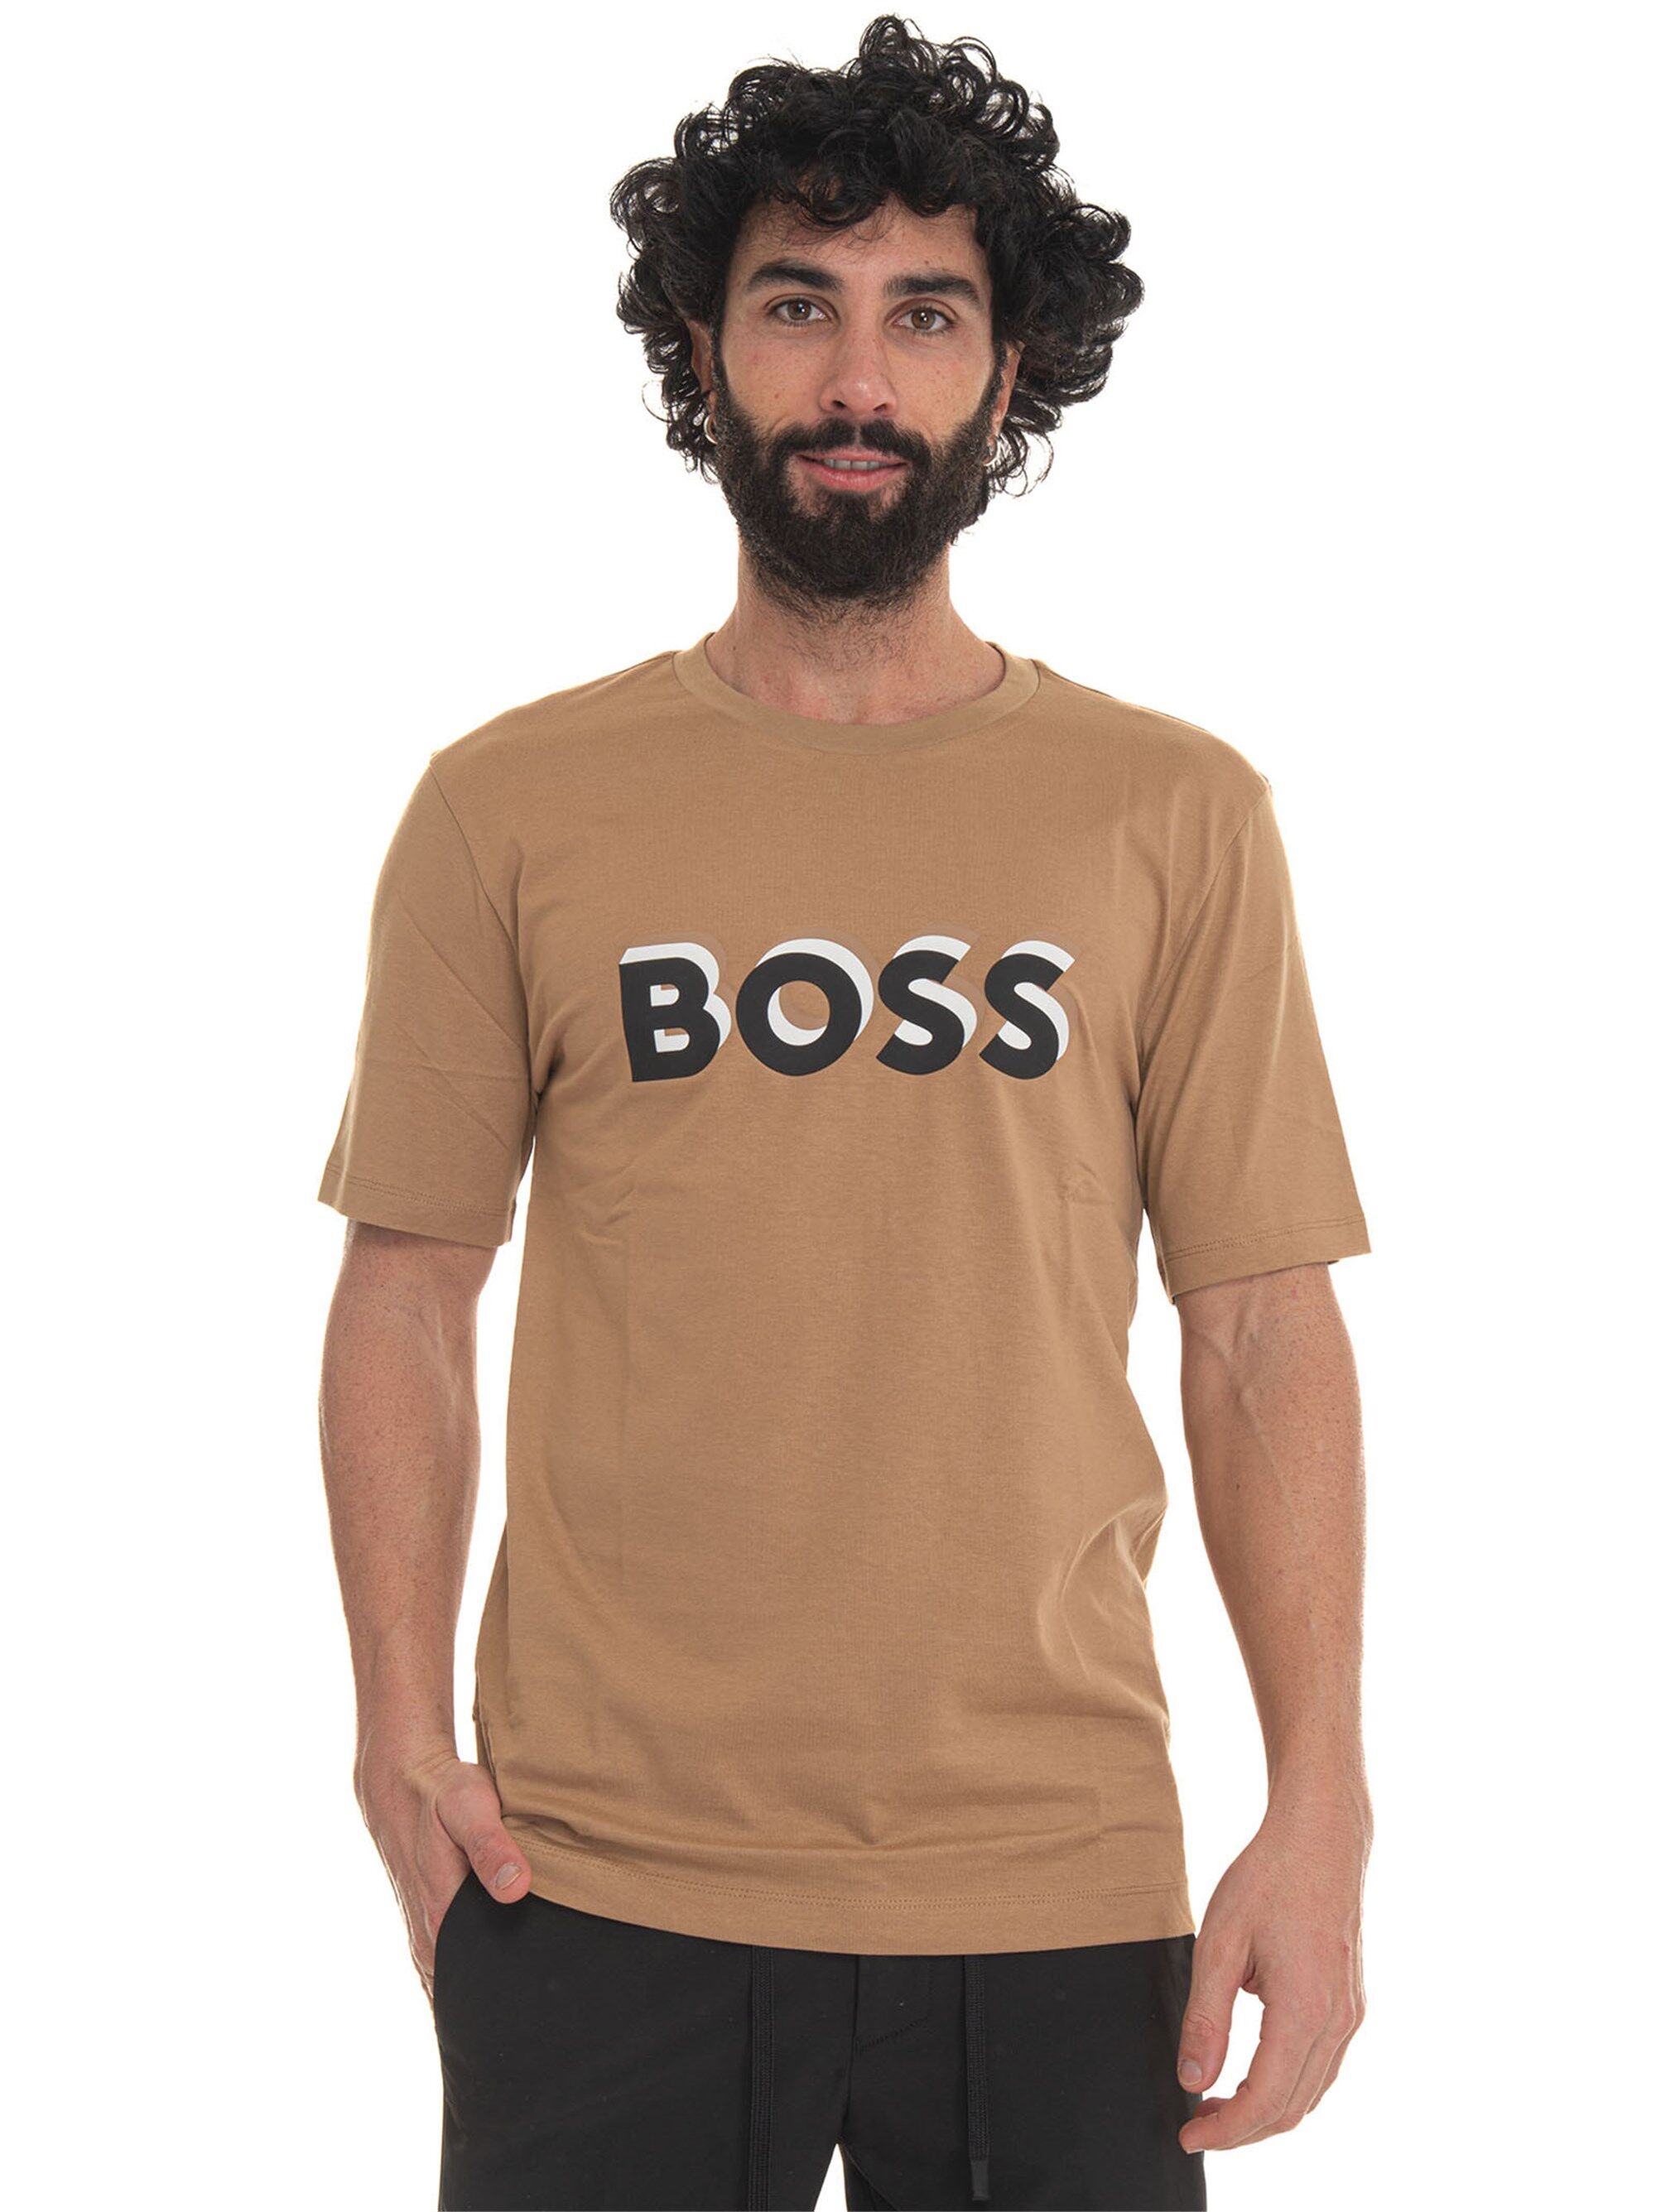 Boss T-shirt girocollo mezza manica Beige Uomo XXL